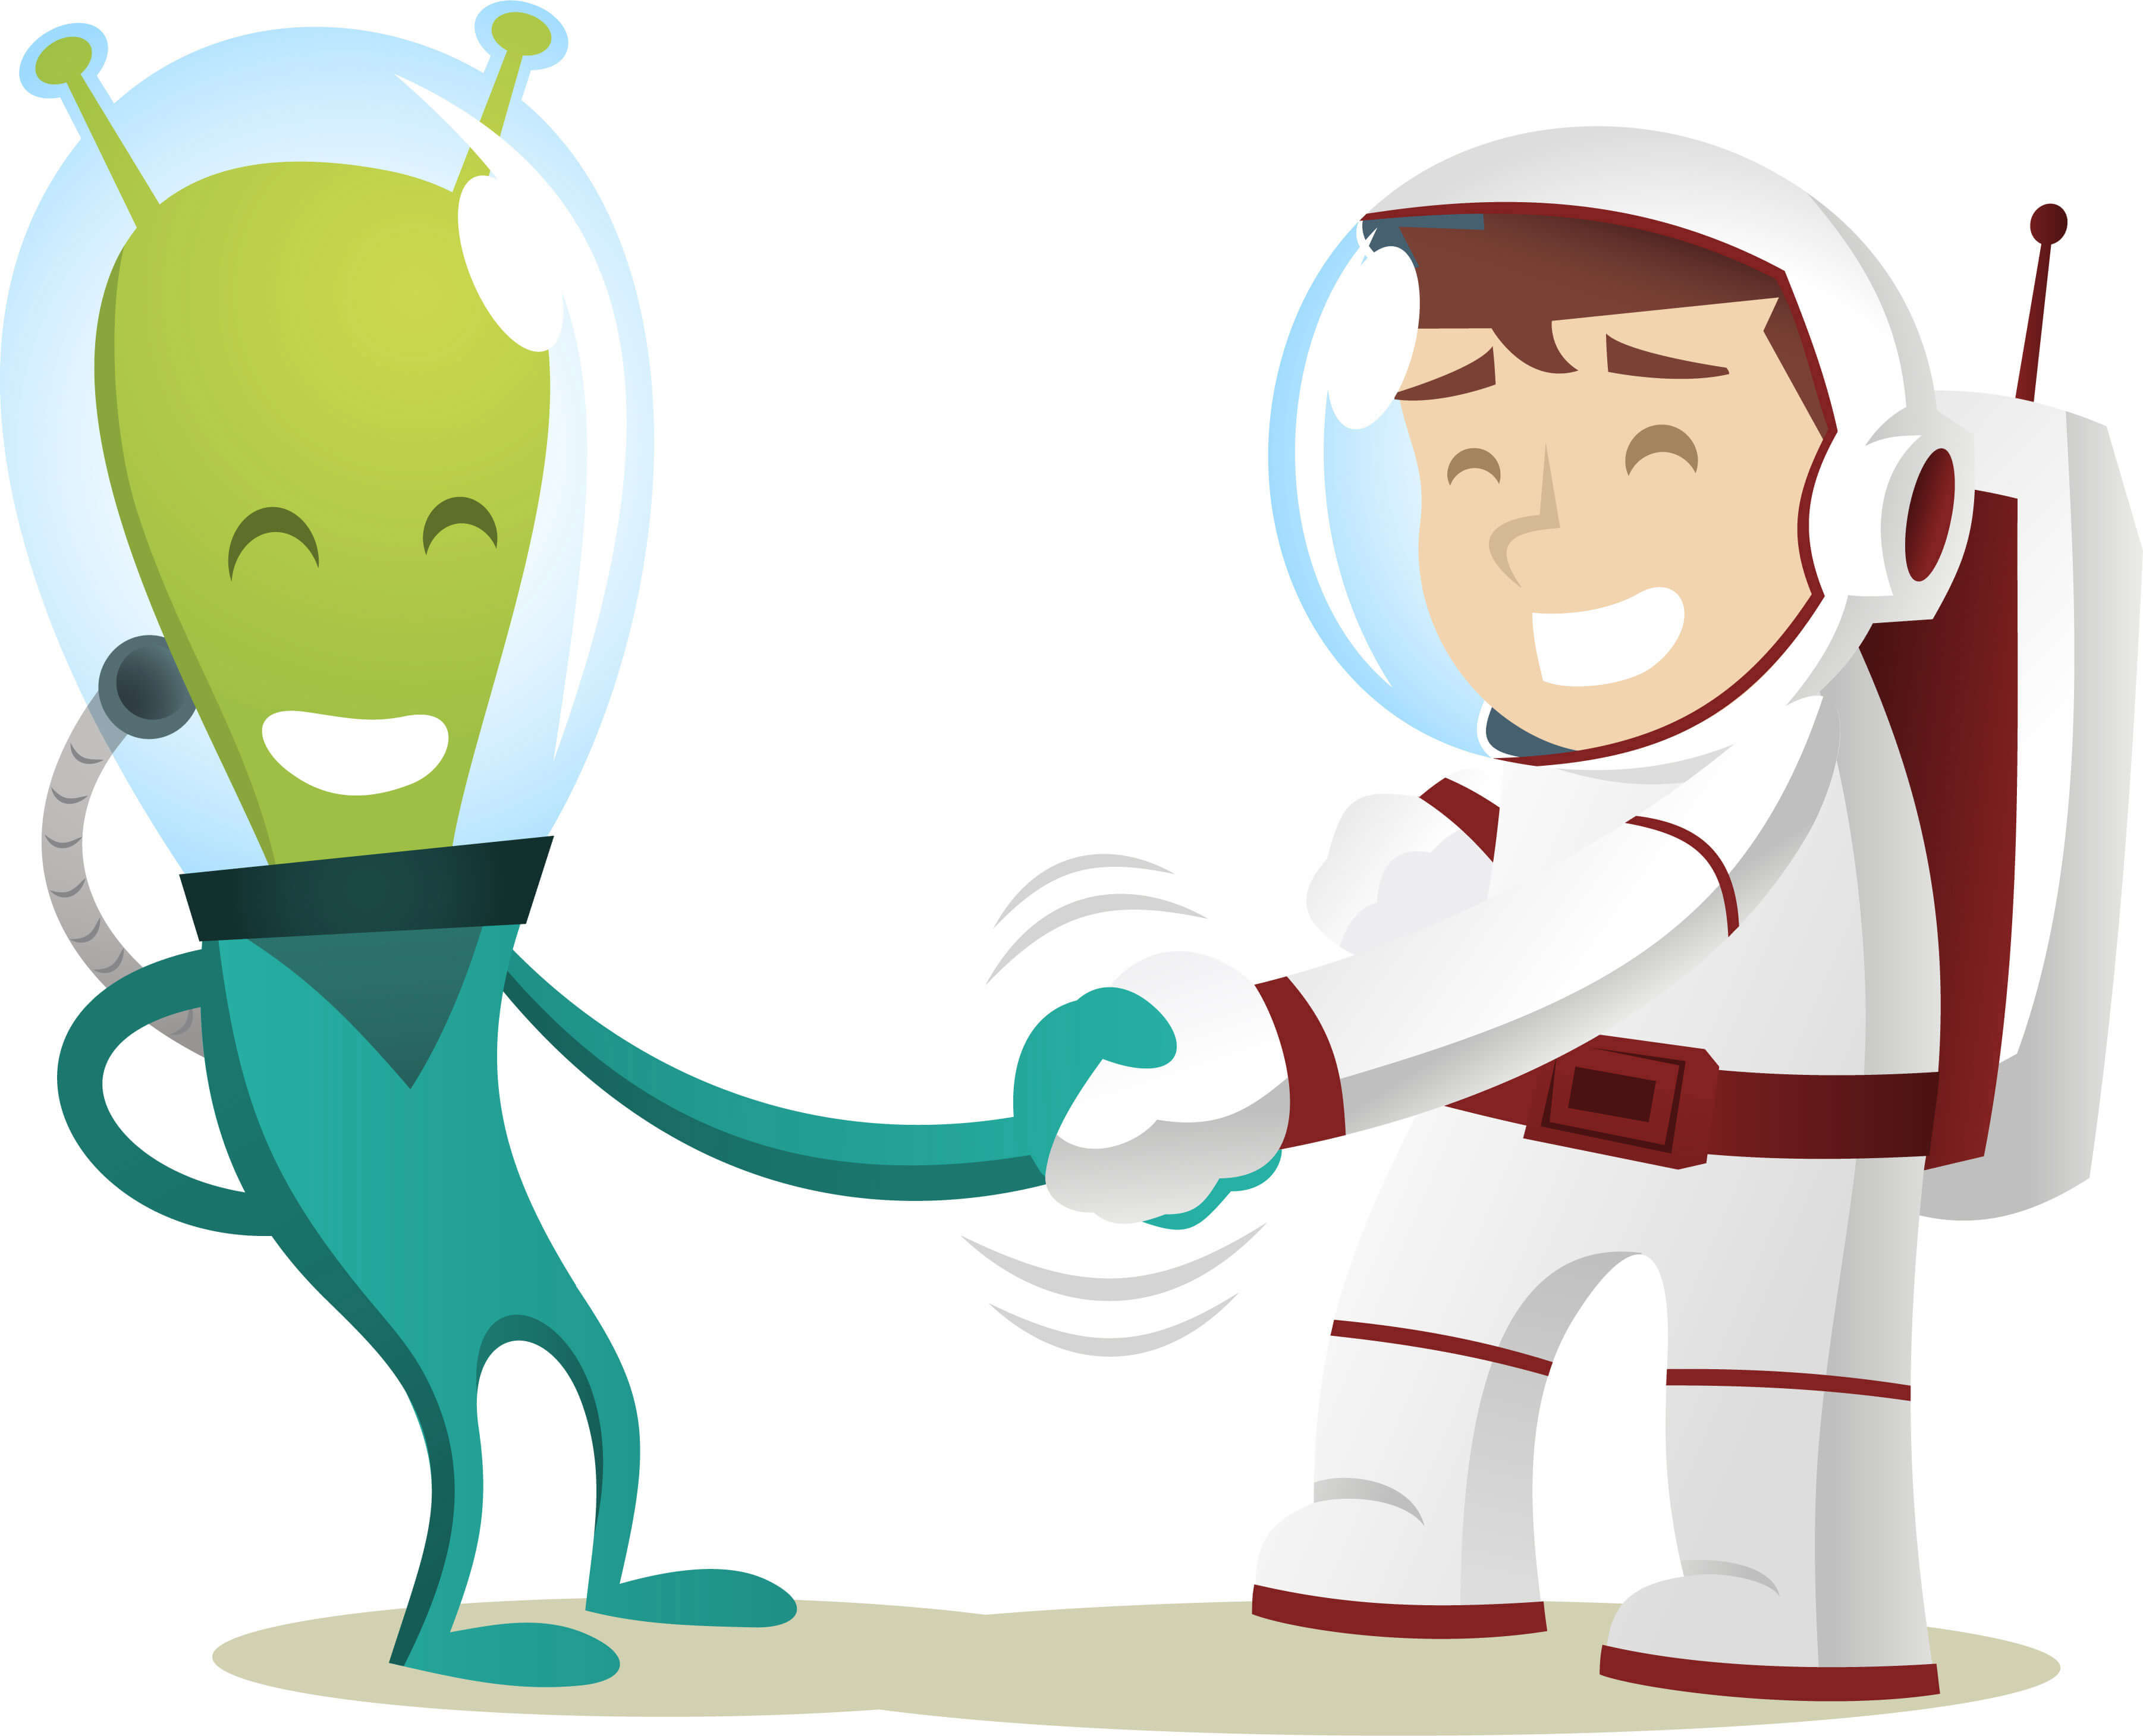 Earthlings-Aliens Friendship Association. Illustration: shutterstock